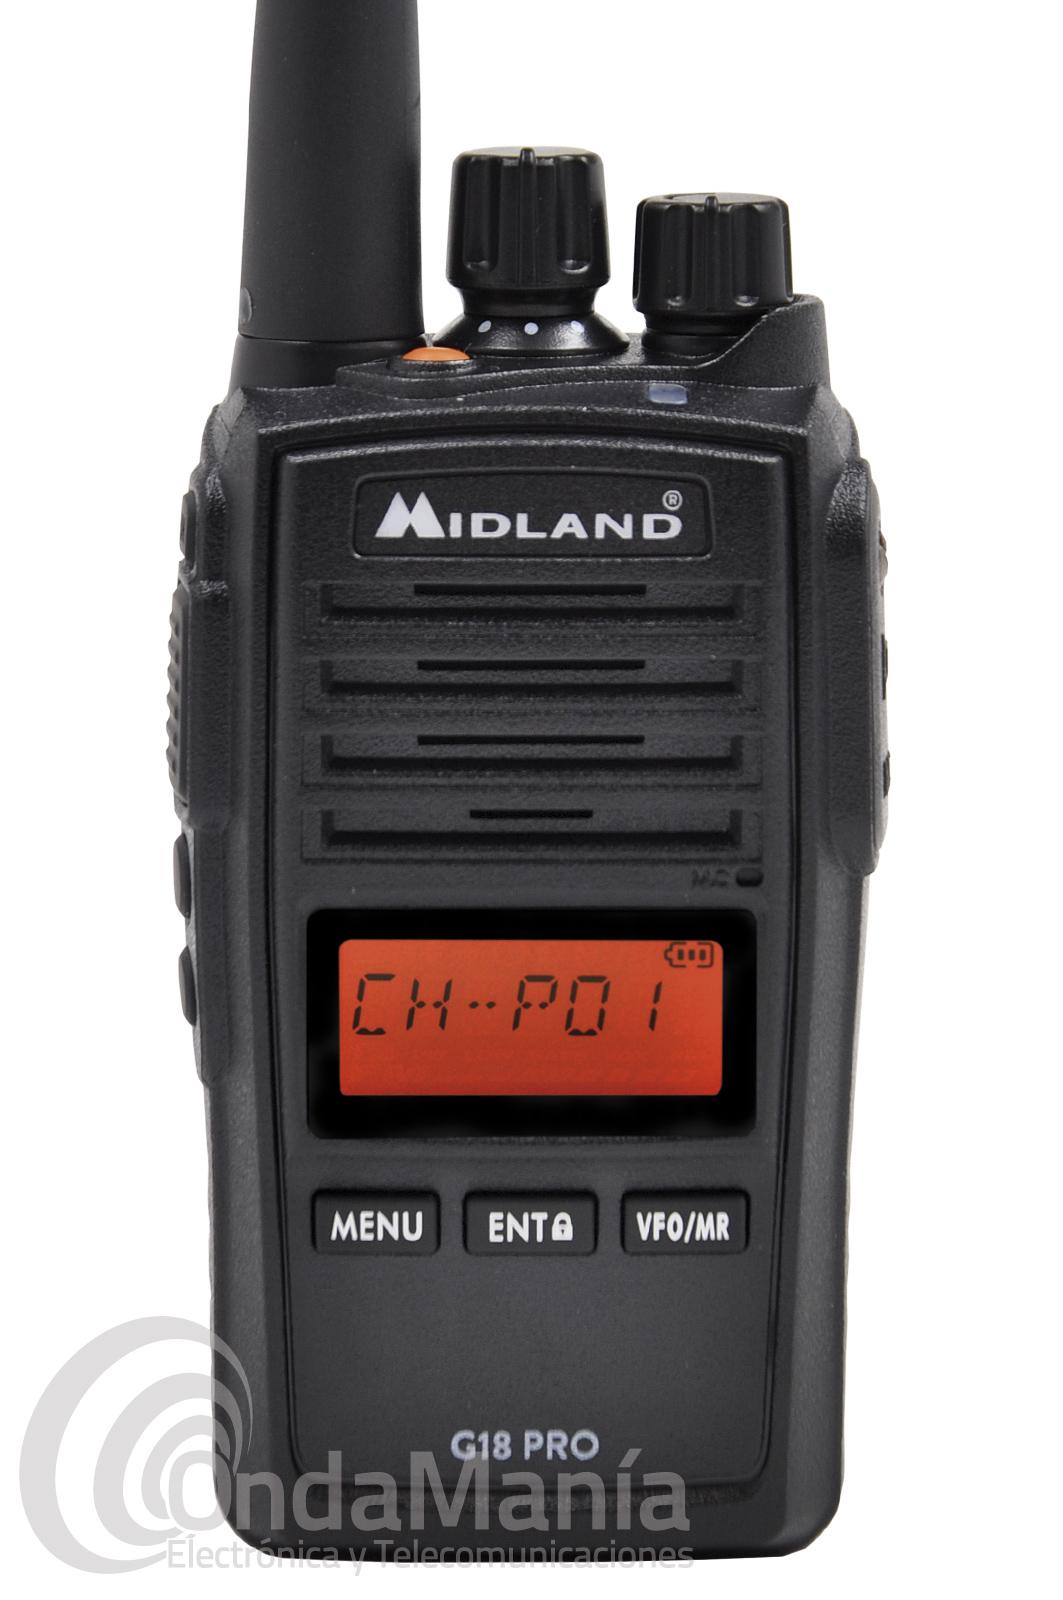 Midland G9 Pro Dual Band Radio Talkie Walkie 40 Canaux PMR446